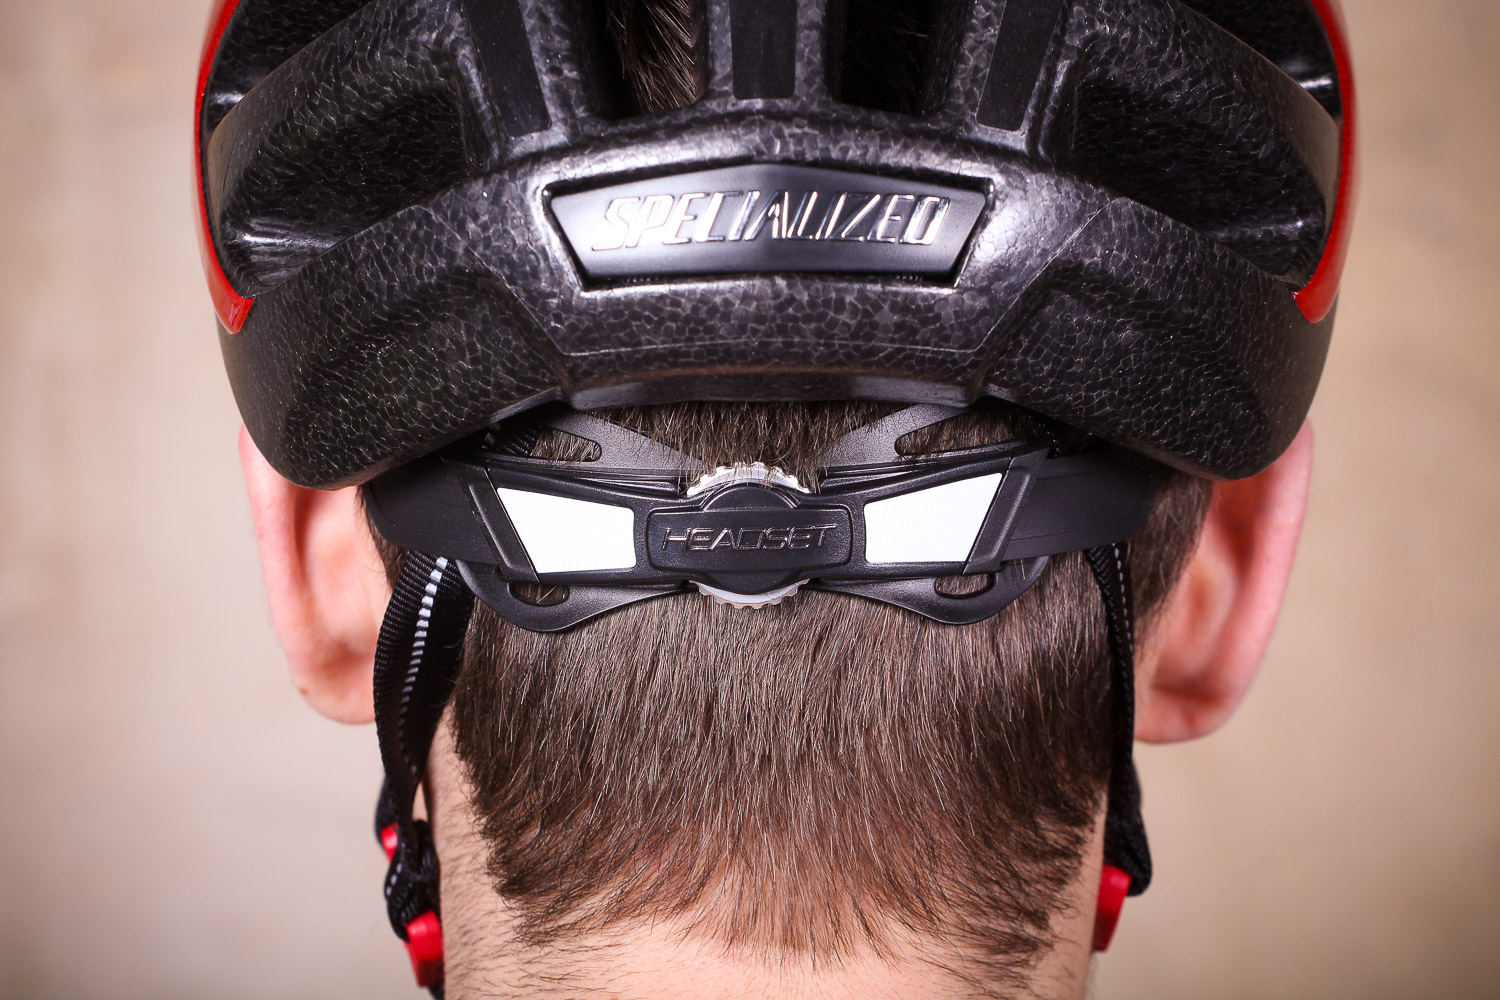 specialized align men's bike helmet